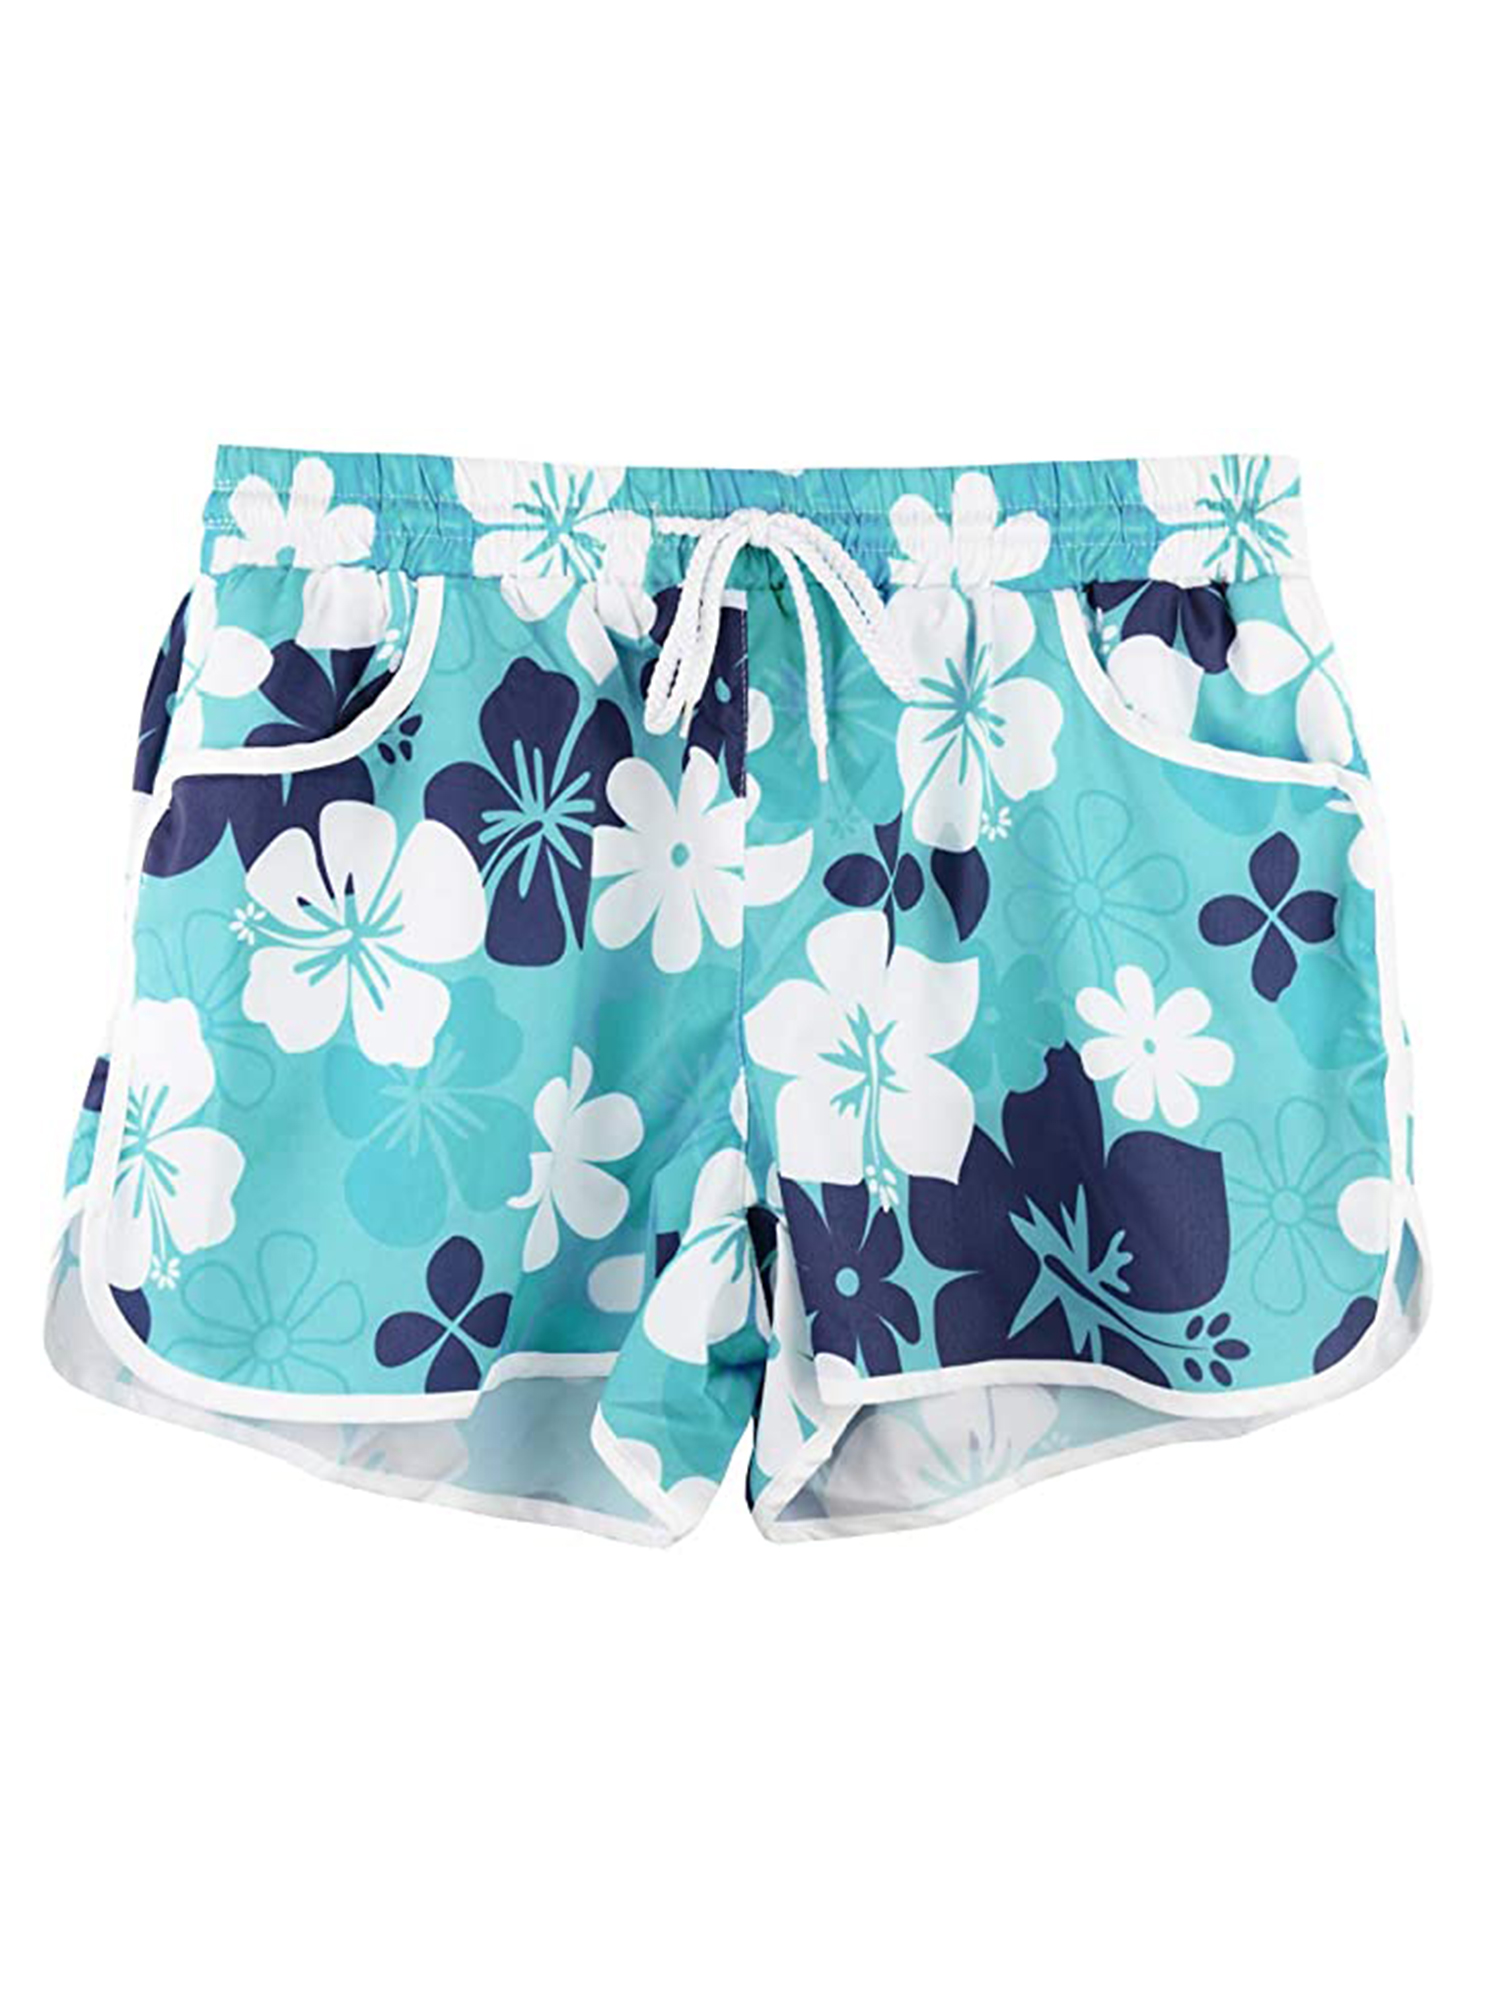 Vintage Floral Beach Swim Shorts for Women Ladies Briefs Tankini Bottoms Bikini Pants Trunks Swimwear Swimsuit Beachwear Ladies Casual Comfy Bathing Suit Casual Swimming Fitness Gym Shorts - image 1 of 4